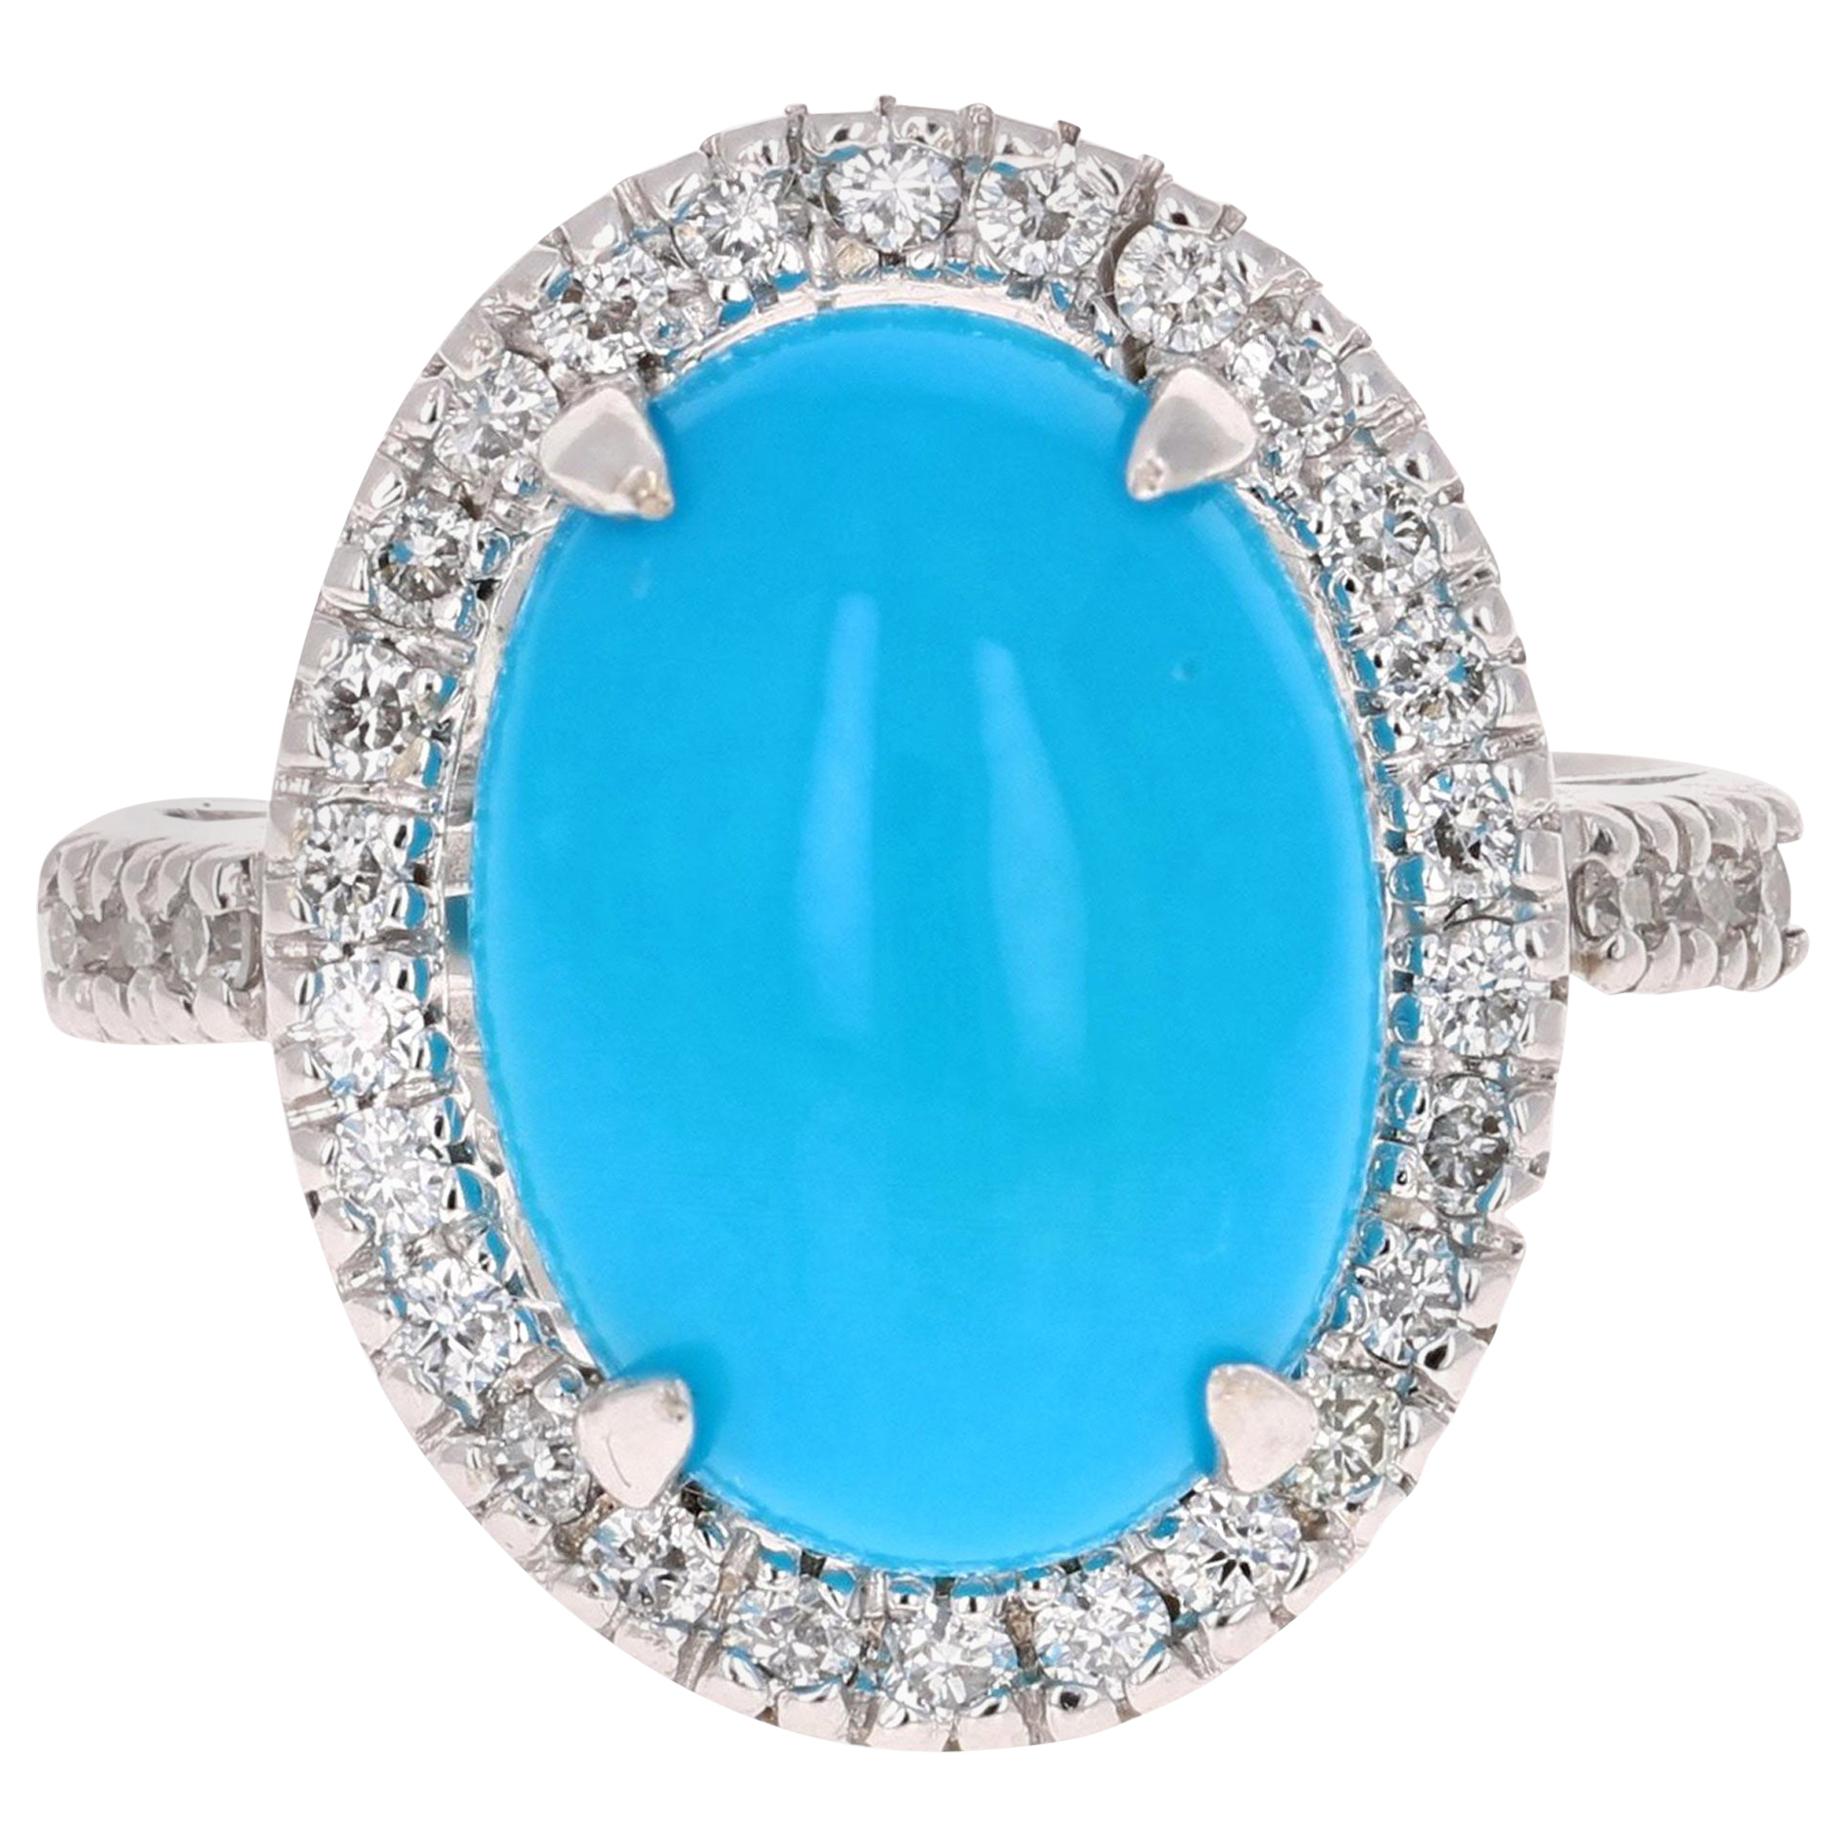 5.26 Carat Oval Cut Turquoise Diamond White Gold Fashion Ring